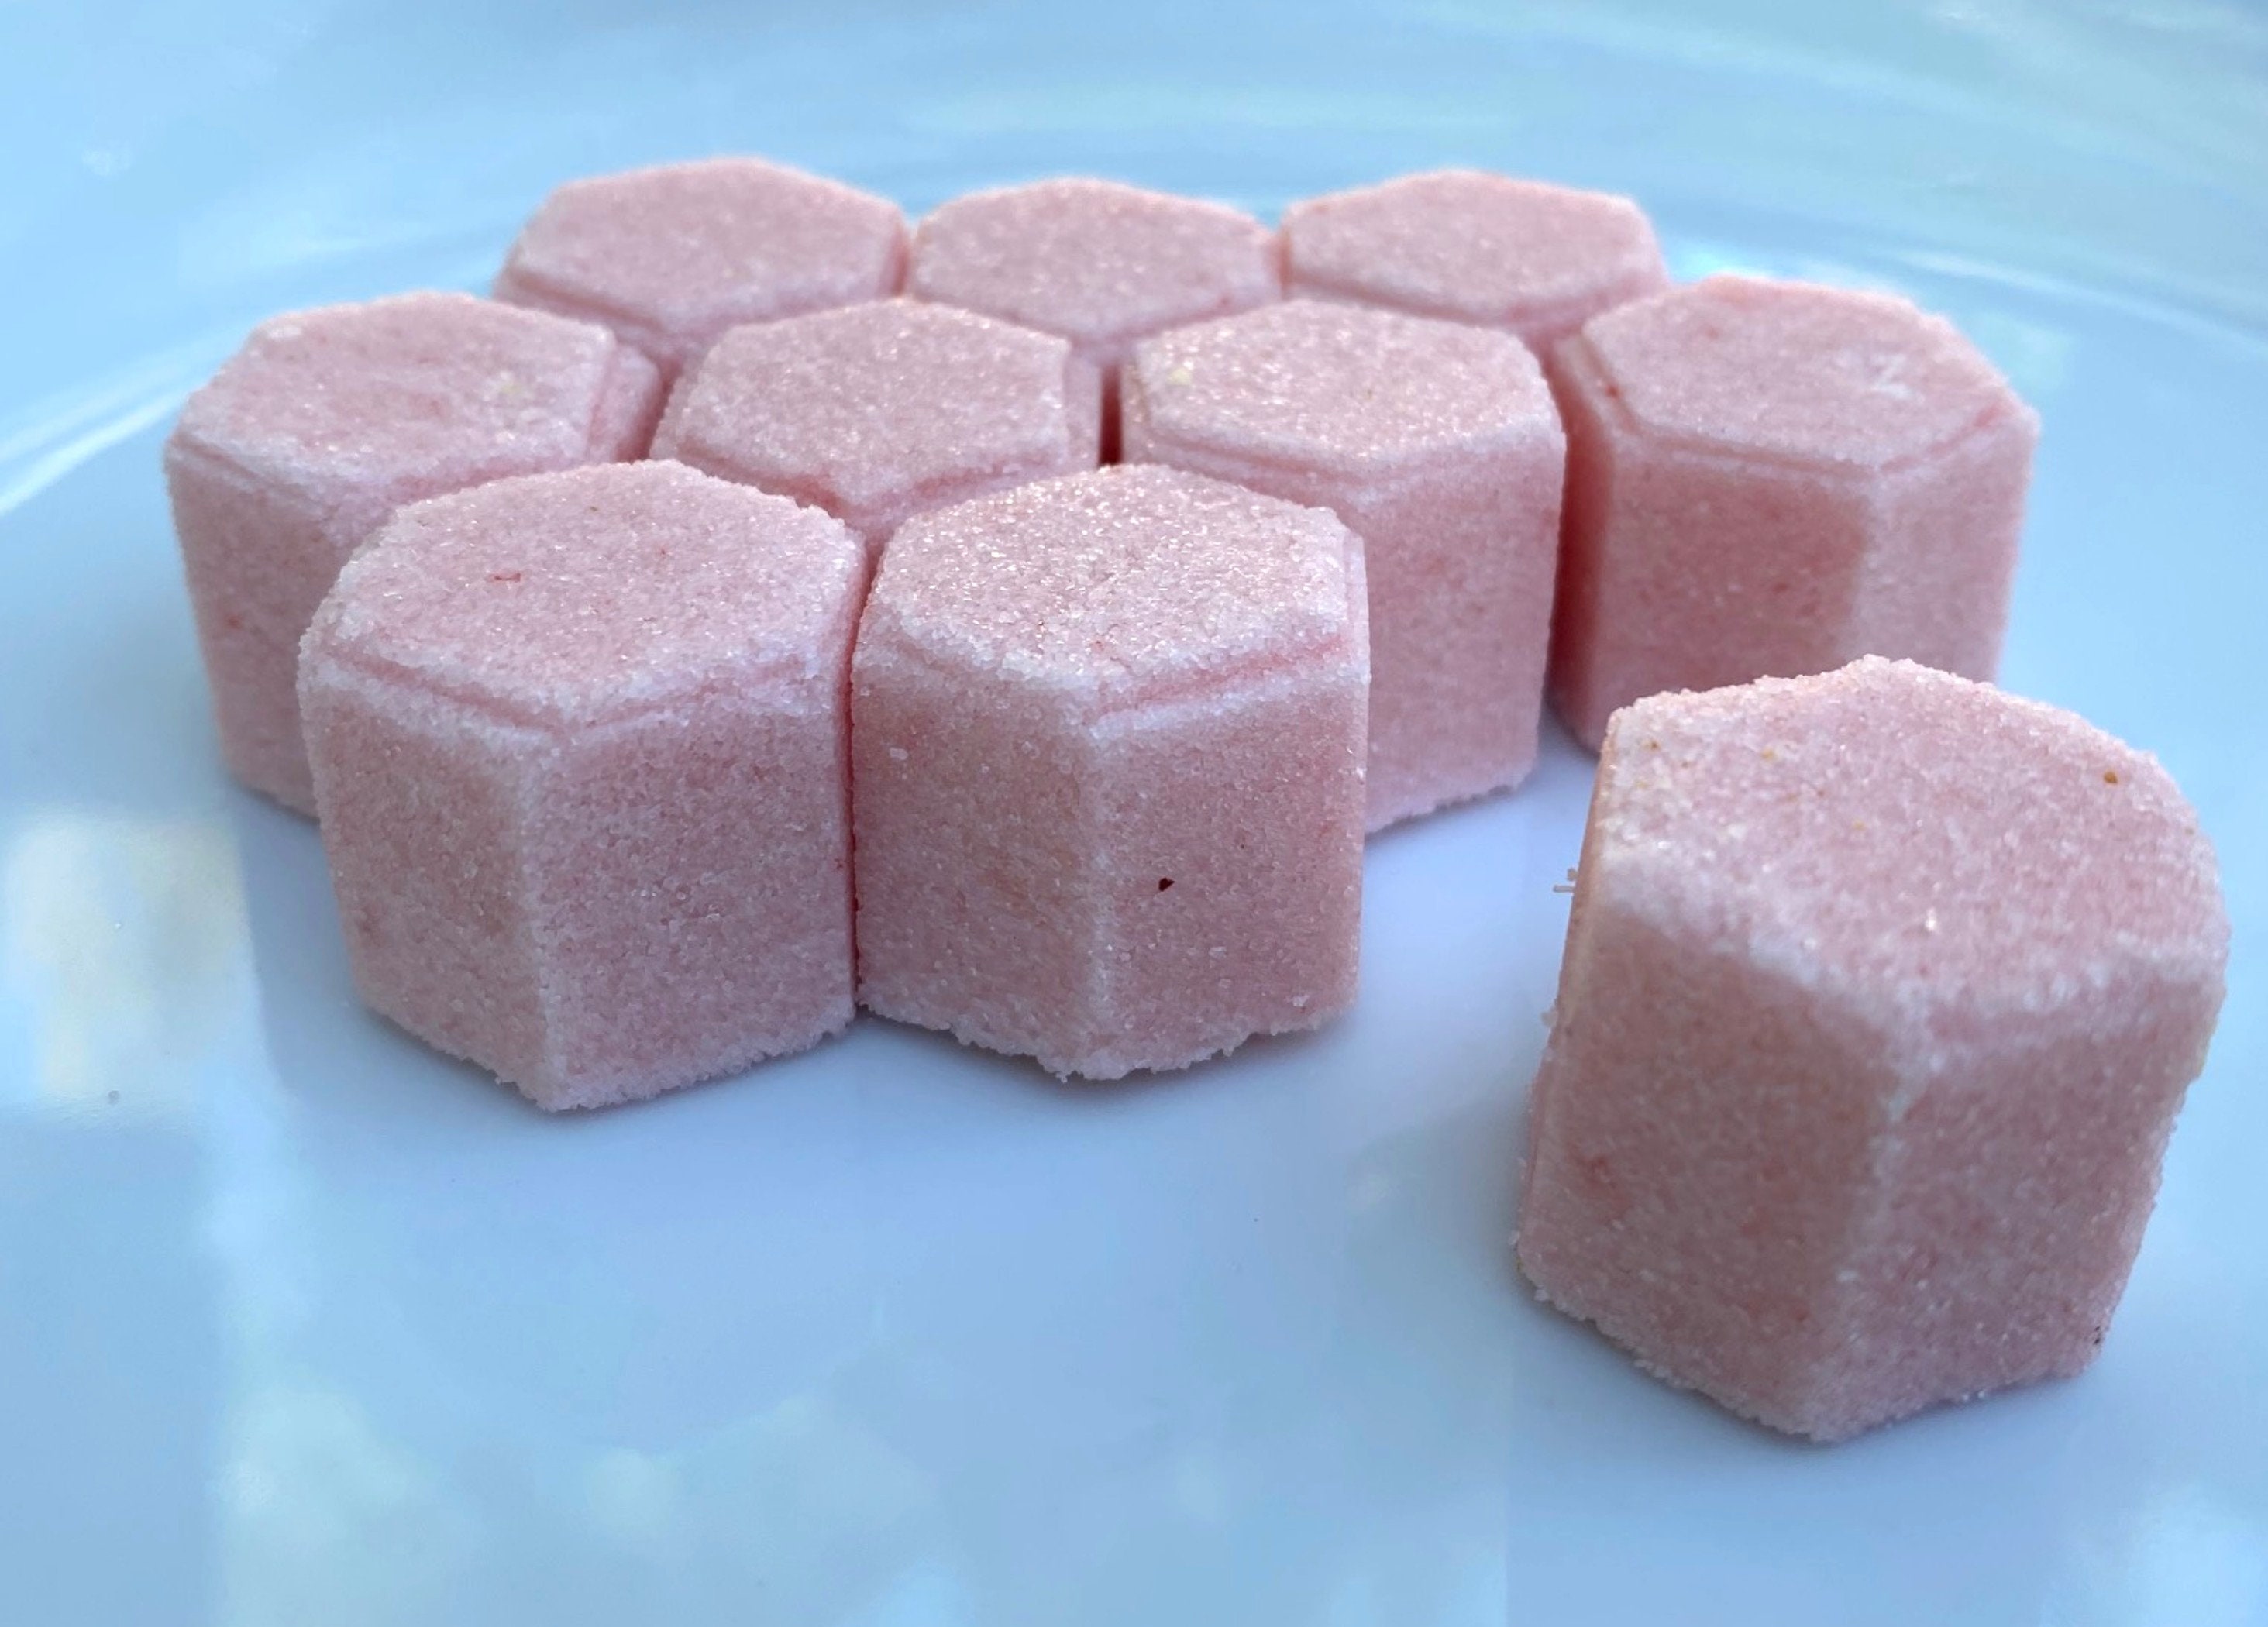  Mimosa Sugar Cubes Set! Raspberry Sugar Cubes and Lemon Sugar  Cubes! Great At Brunch : Grocery & Gourmet Food